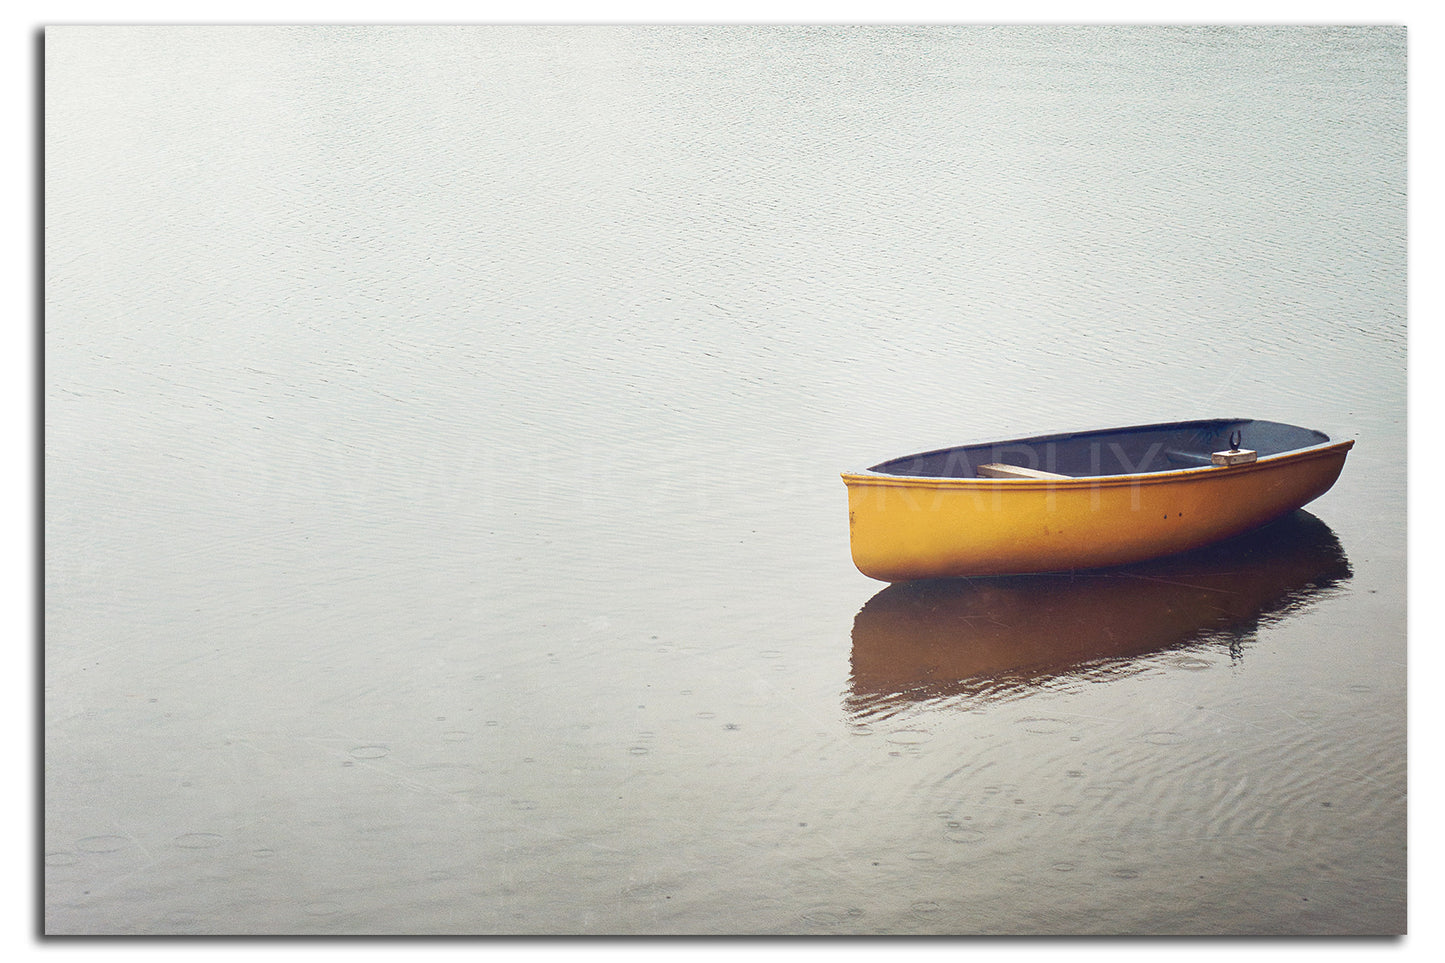 Rowboat in Calm Rain<br>Hofsos Iceland <br>Limited Edition Archival Fine Art Chromogenic Print